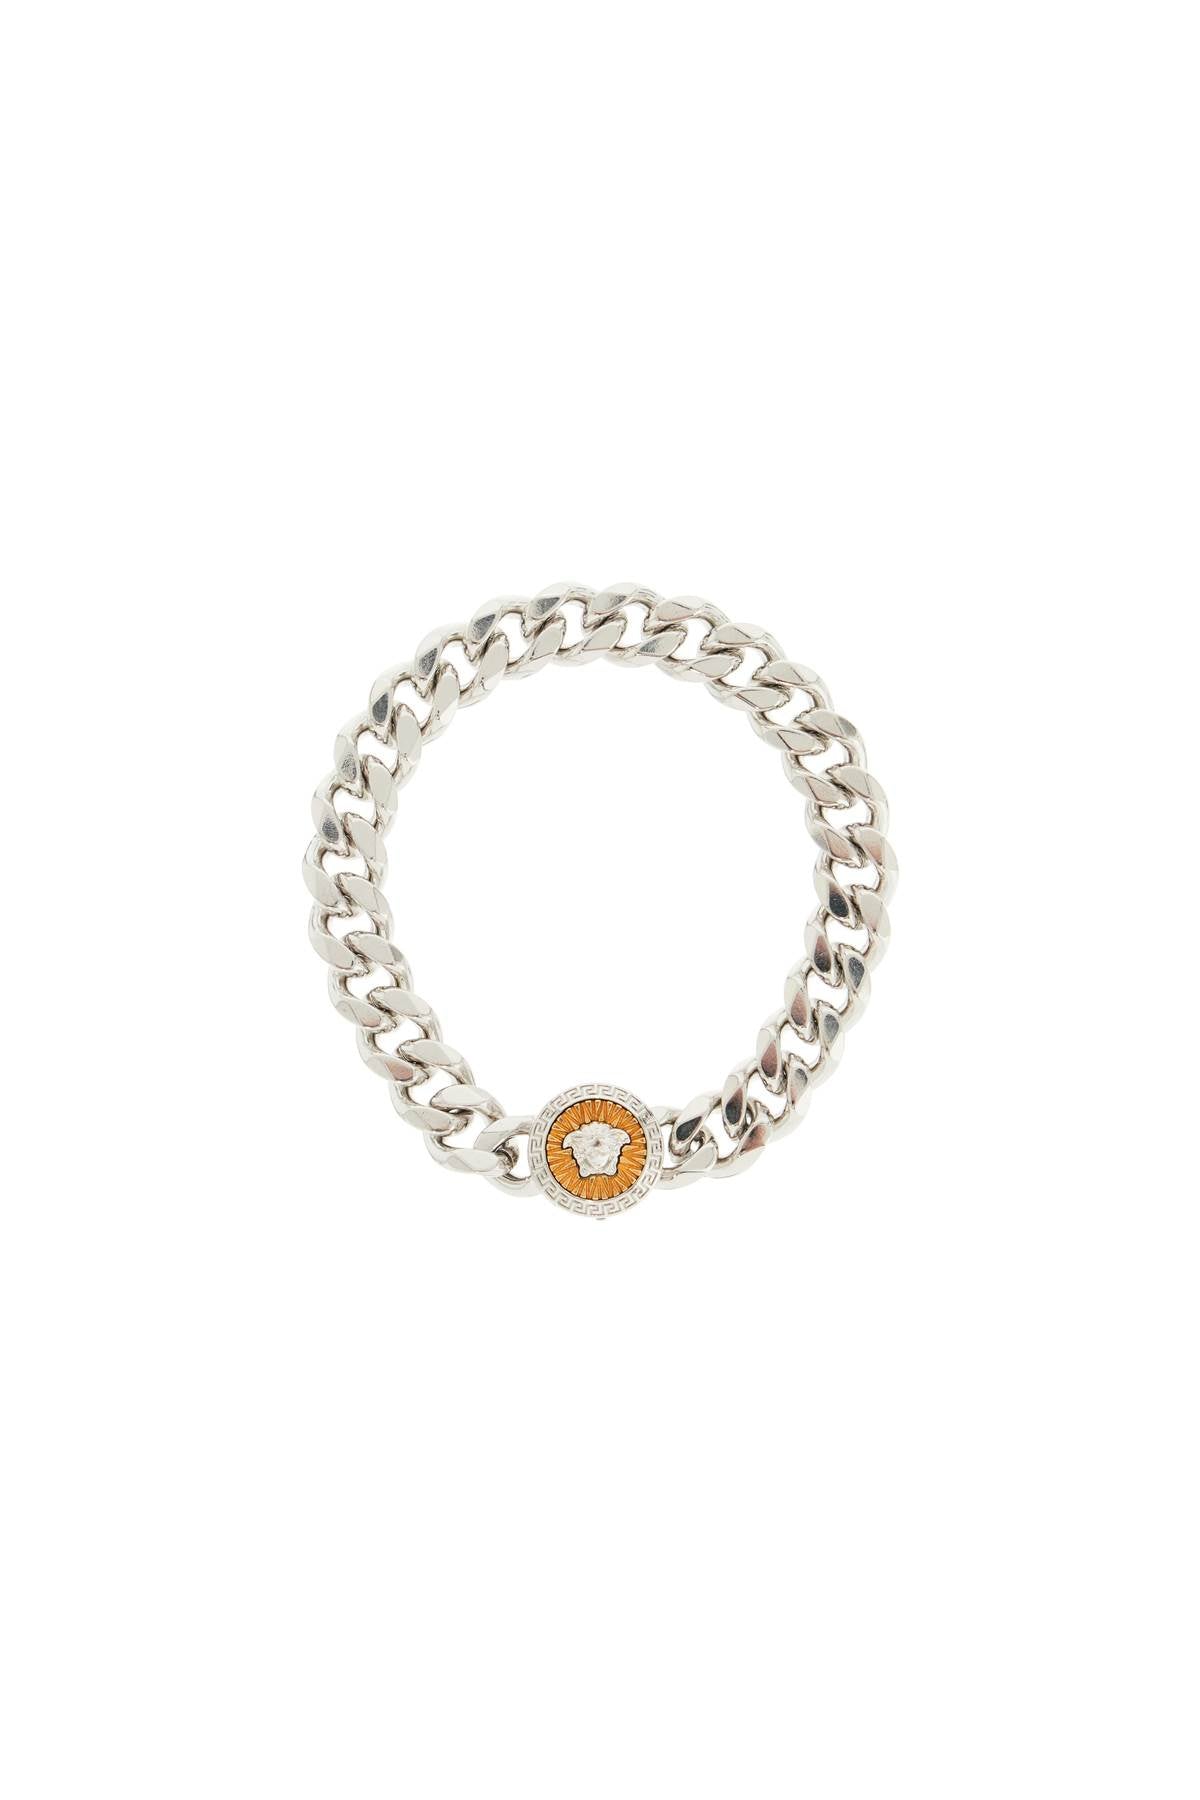 Versace "chain bracelet with medusa charm - Silver